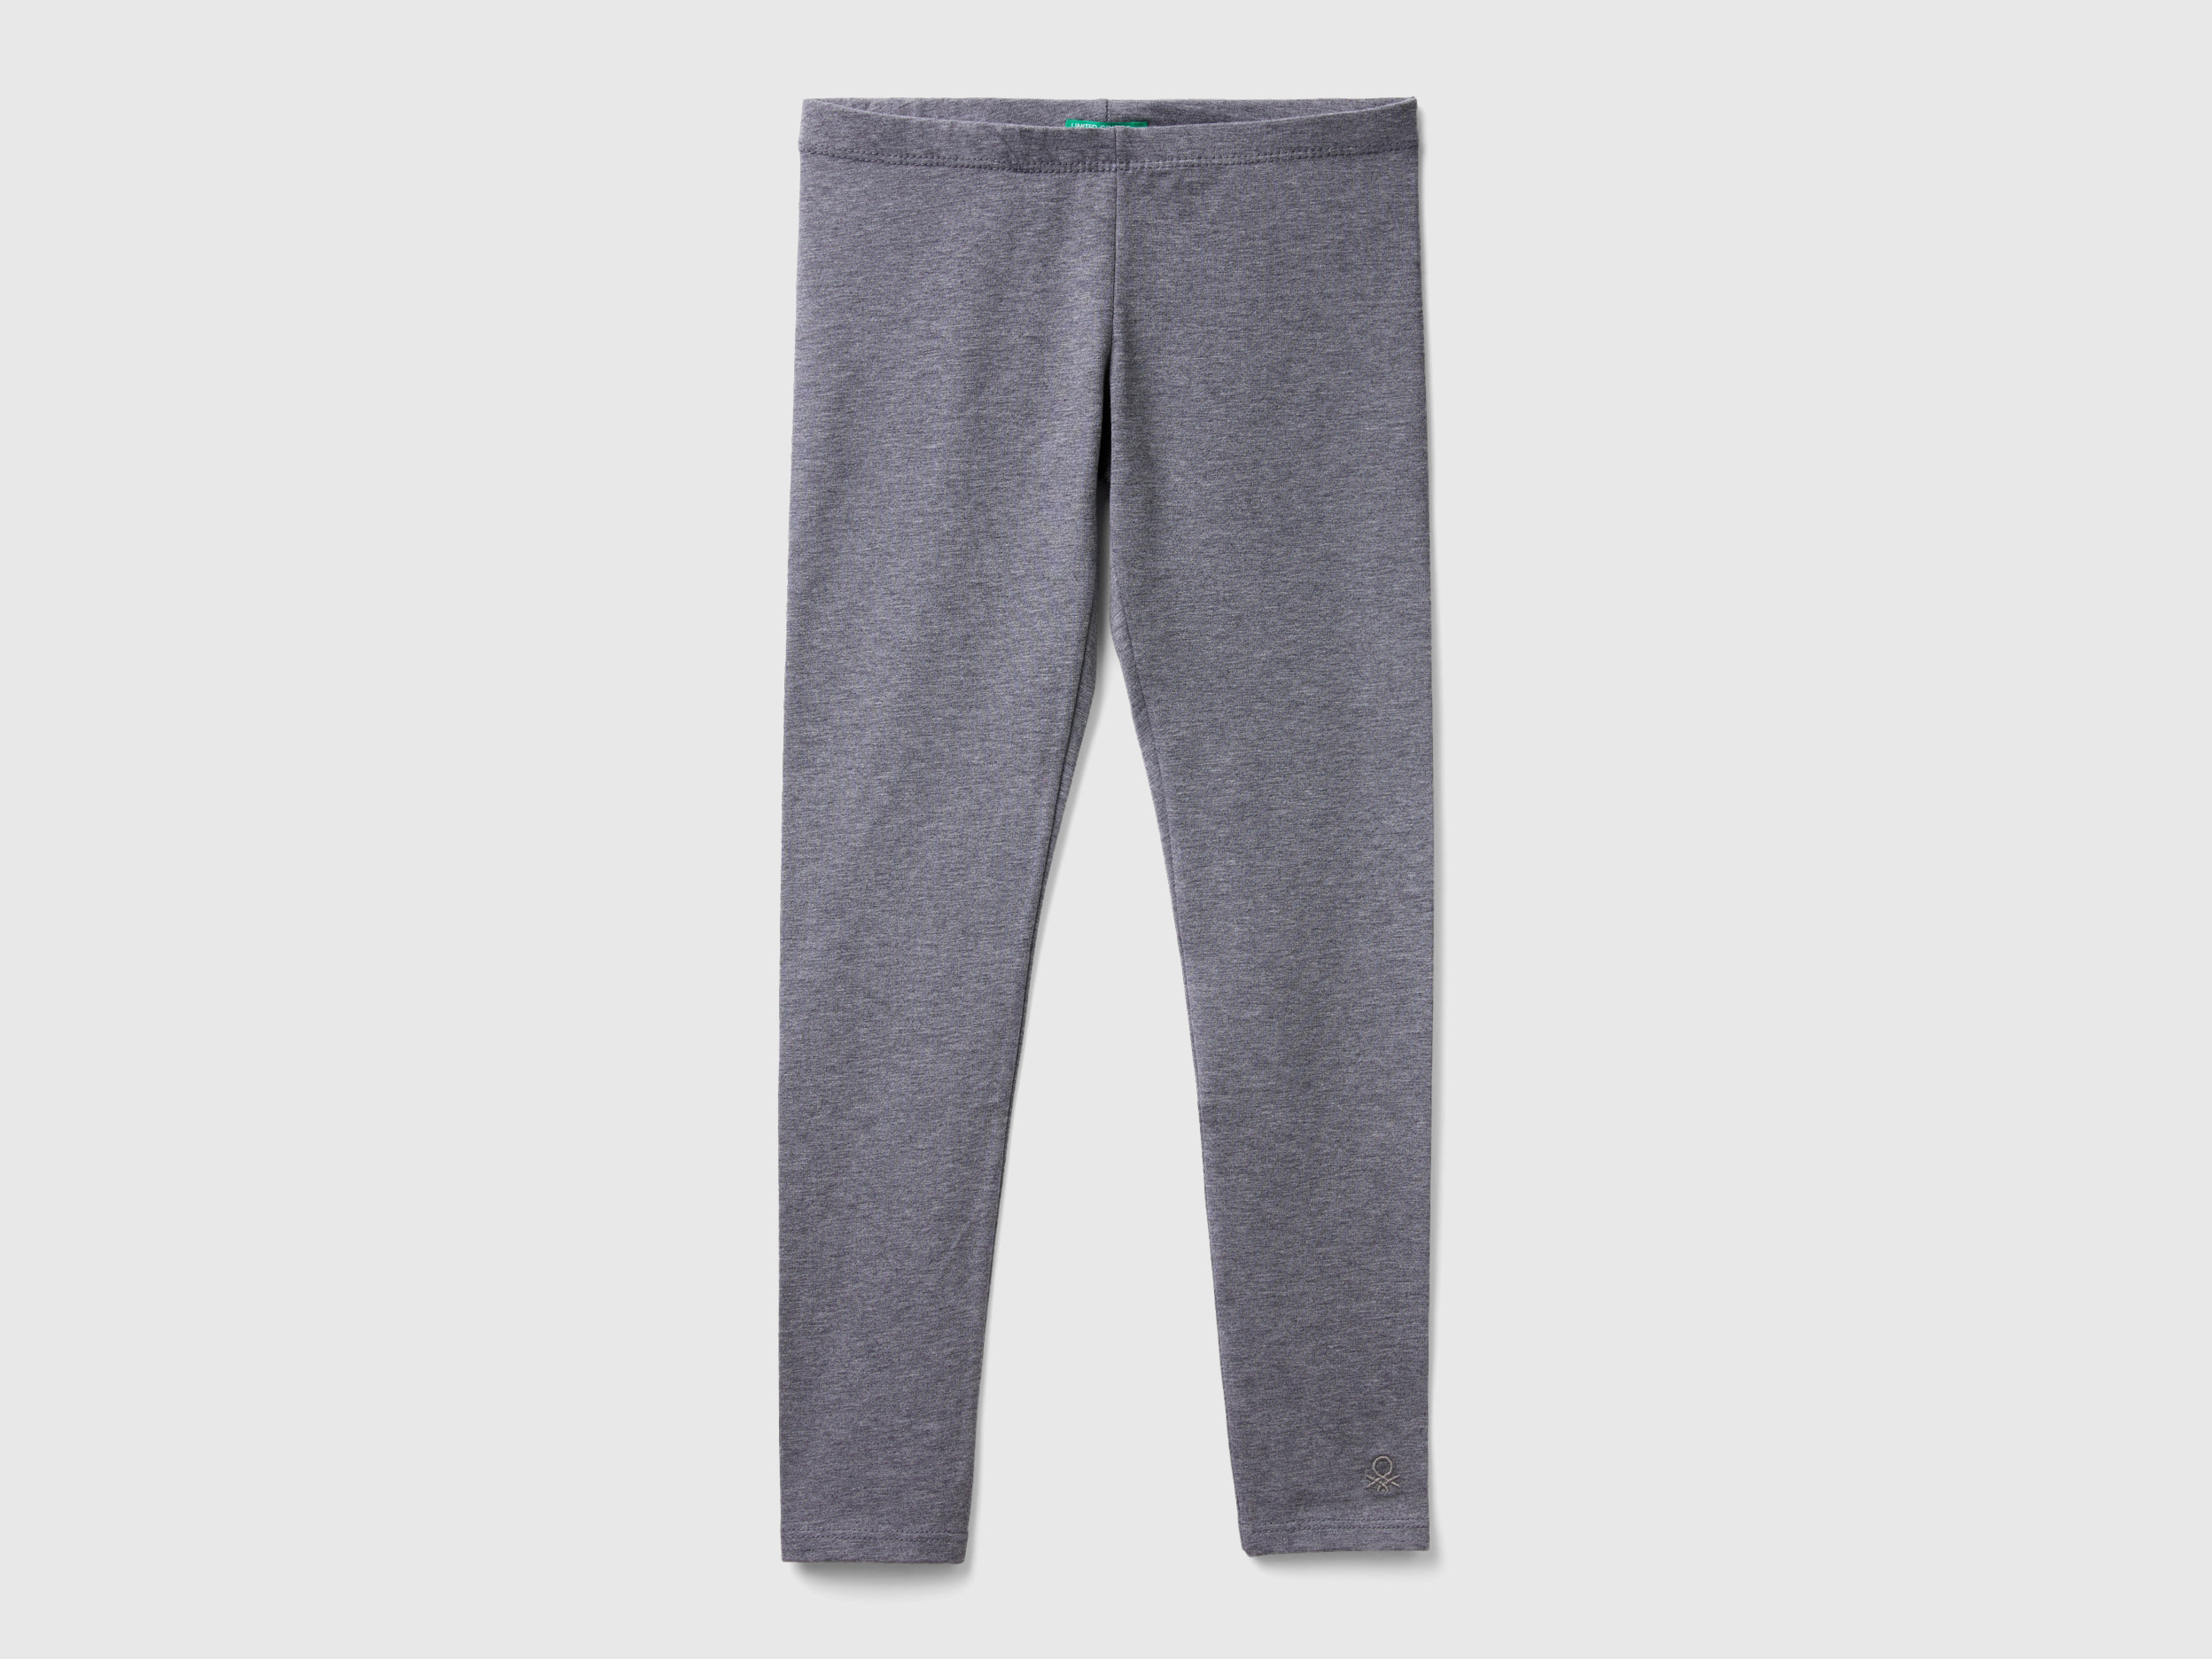 Benetton, Leggings In Stretch Cotton With Logo, size 3XL, Dark Gray, Kids